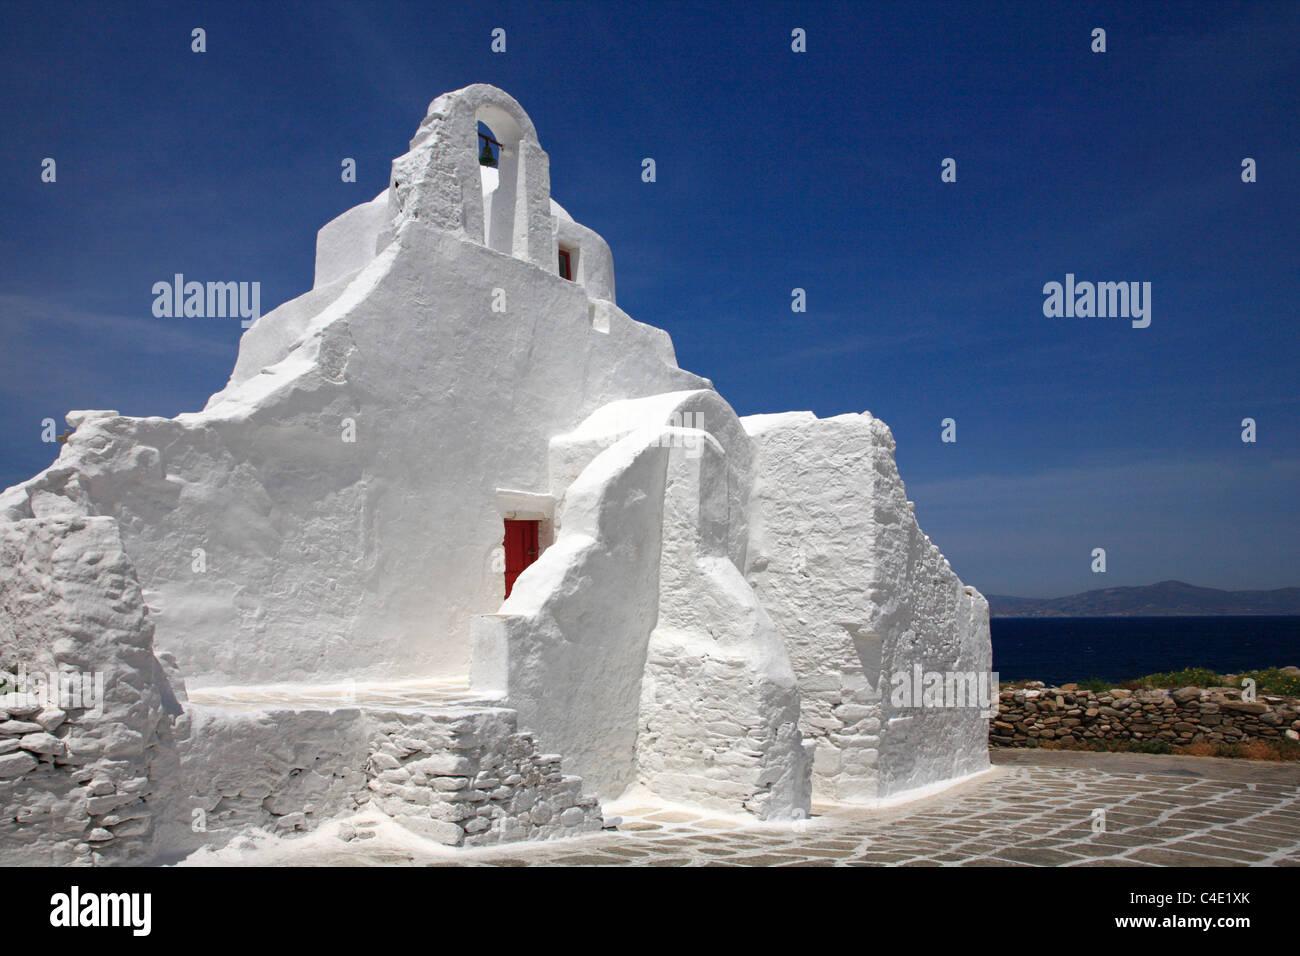 Chiesa Paraportiani Mykonos Cyclades Grecia UE Unione europea EUROPA Foto Stock